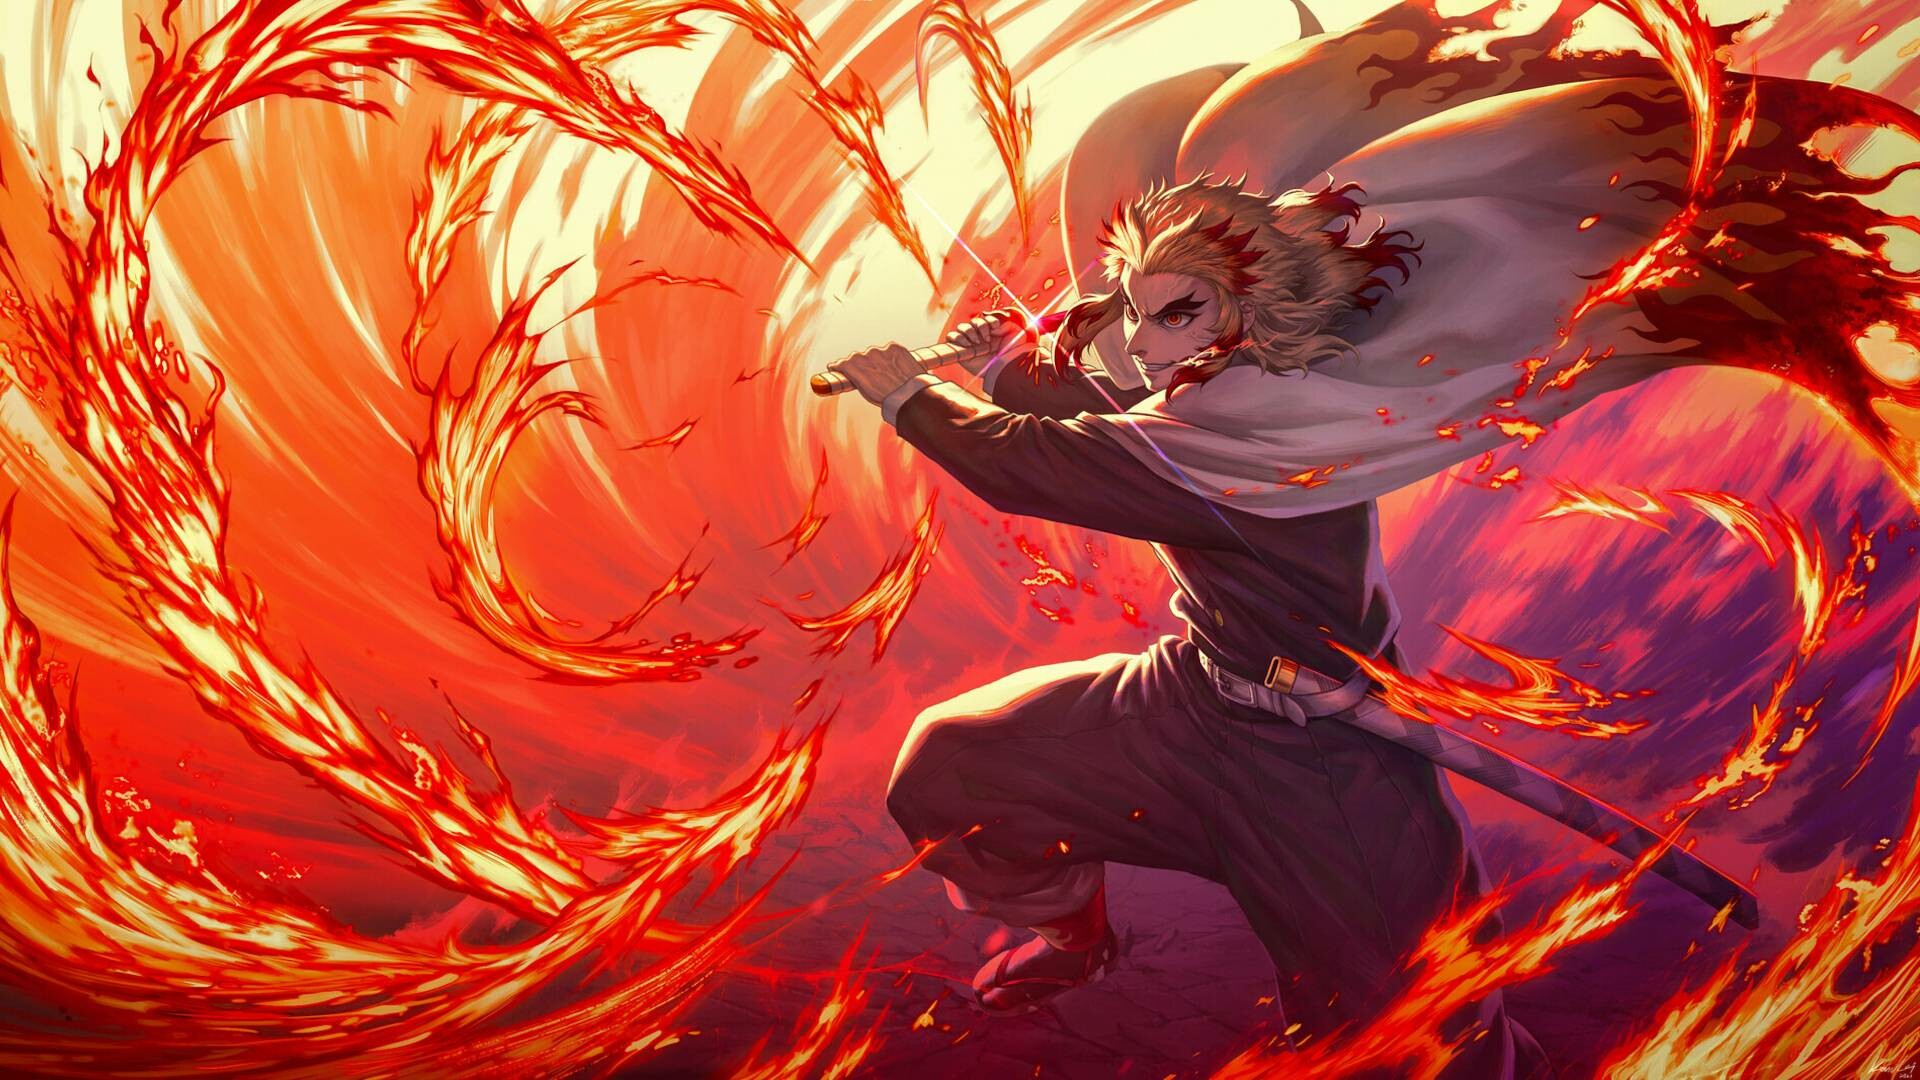 Demon Slayer: Kimetsu no Yaiba: Kyojuro Rengoku, Flame Hashira, Fictional character. 1920x1080 Full HD Wallpaper.